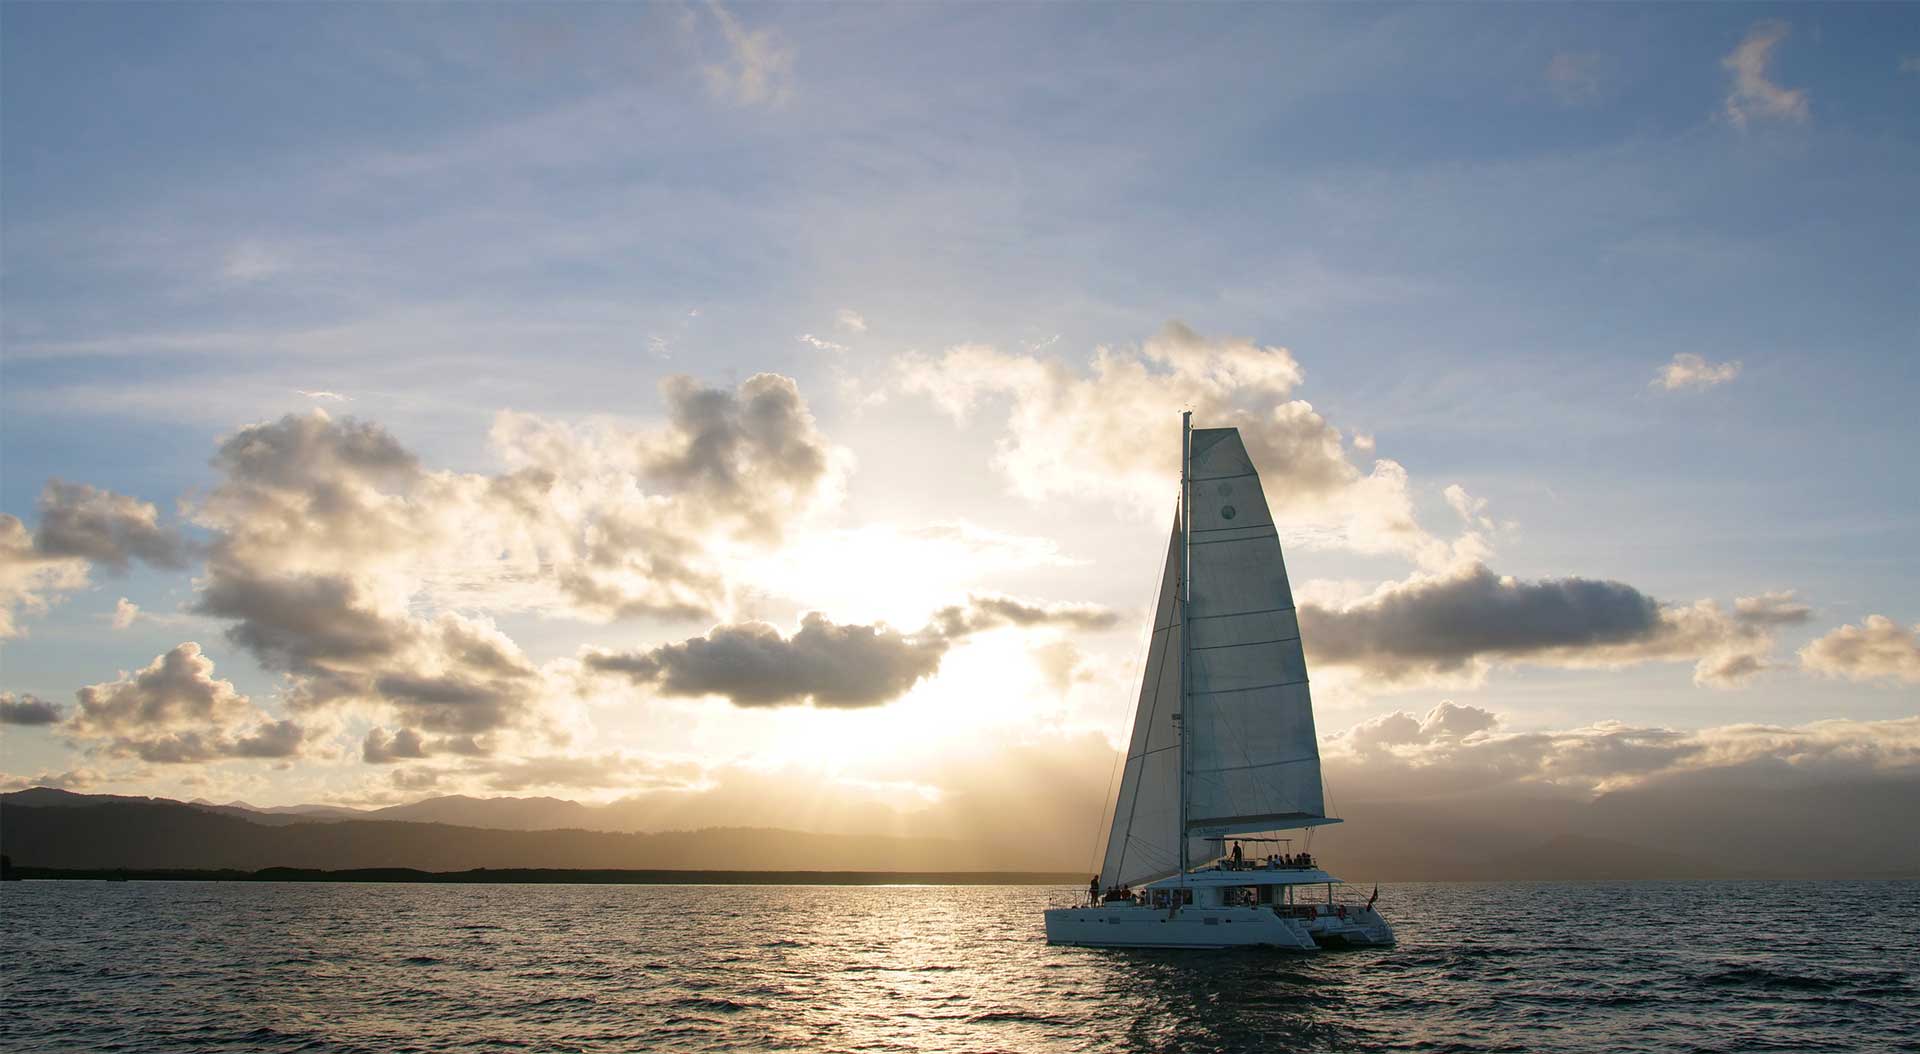 sailaway sunset cruise reviews